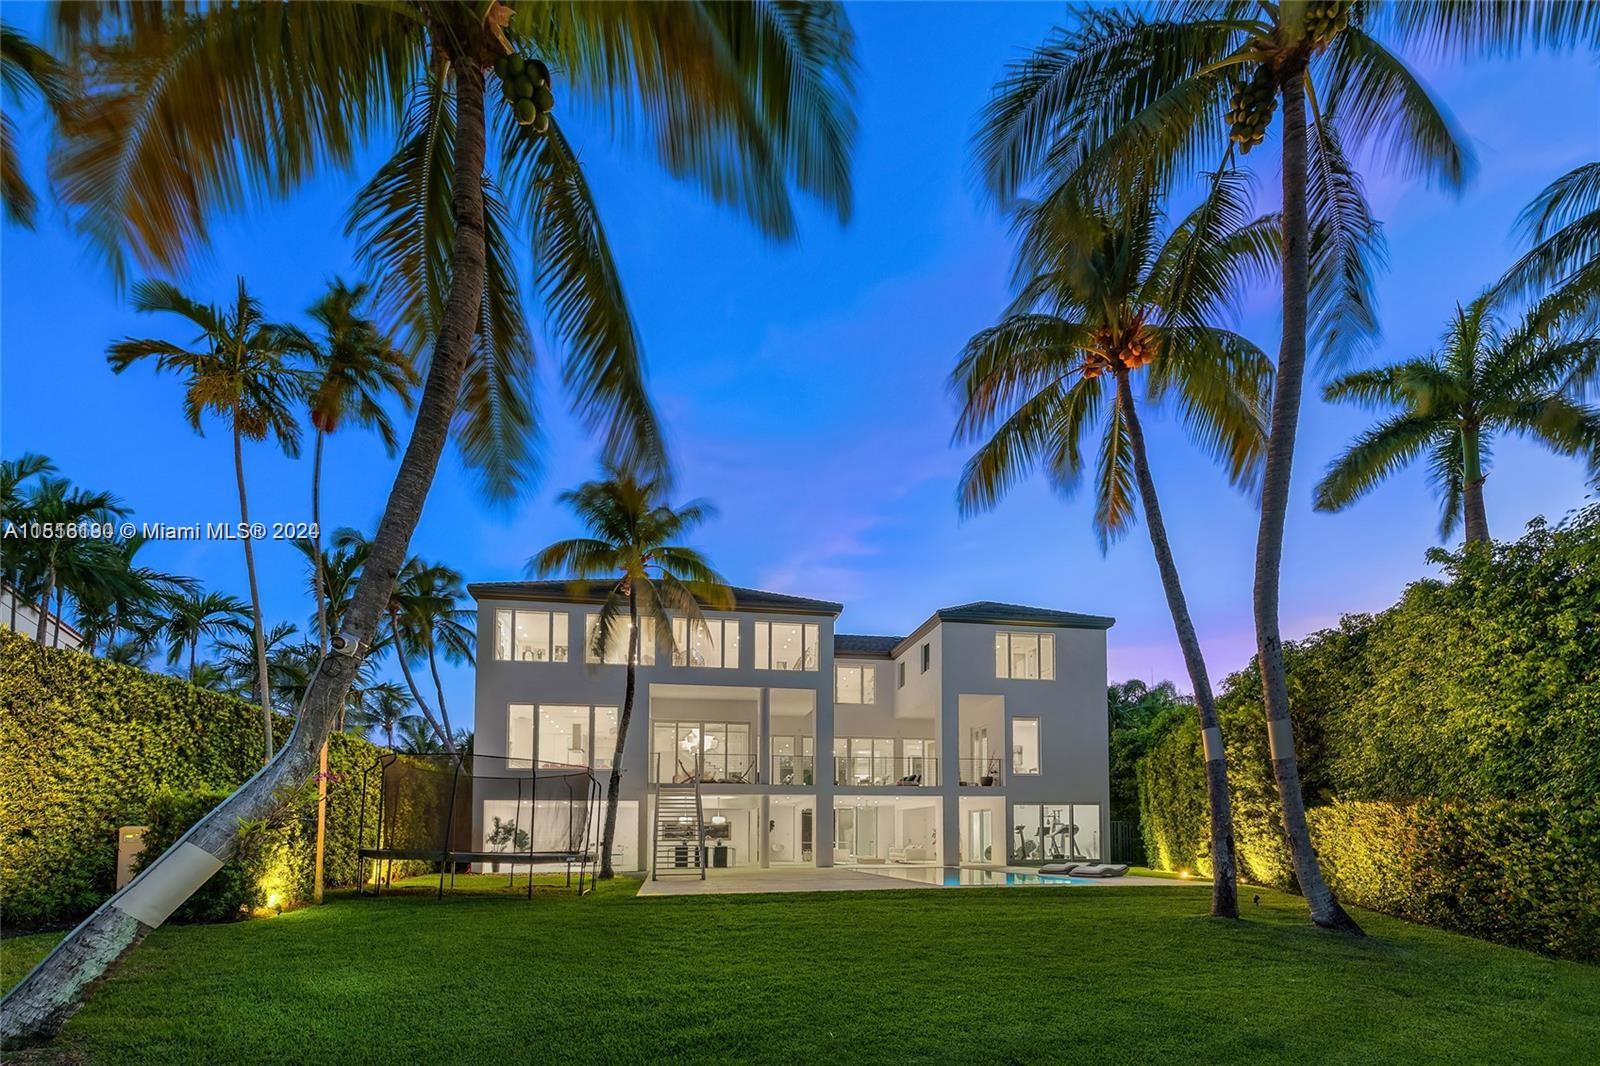 Rental Property at 481 S Mashta Drive Dr, Key Biscayne, Miami-Dade County, Florida - Bedrooms: 5 
Bathrooms: 7  - $79,500 MO.